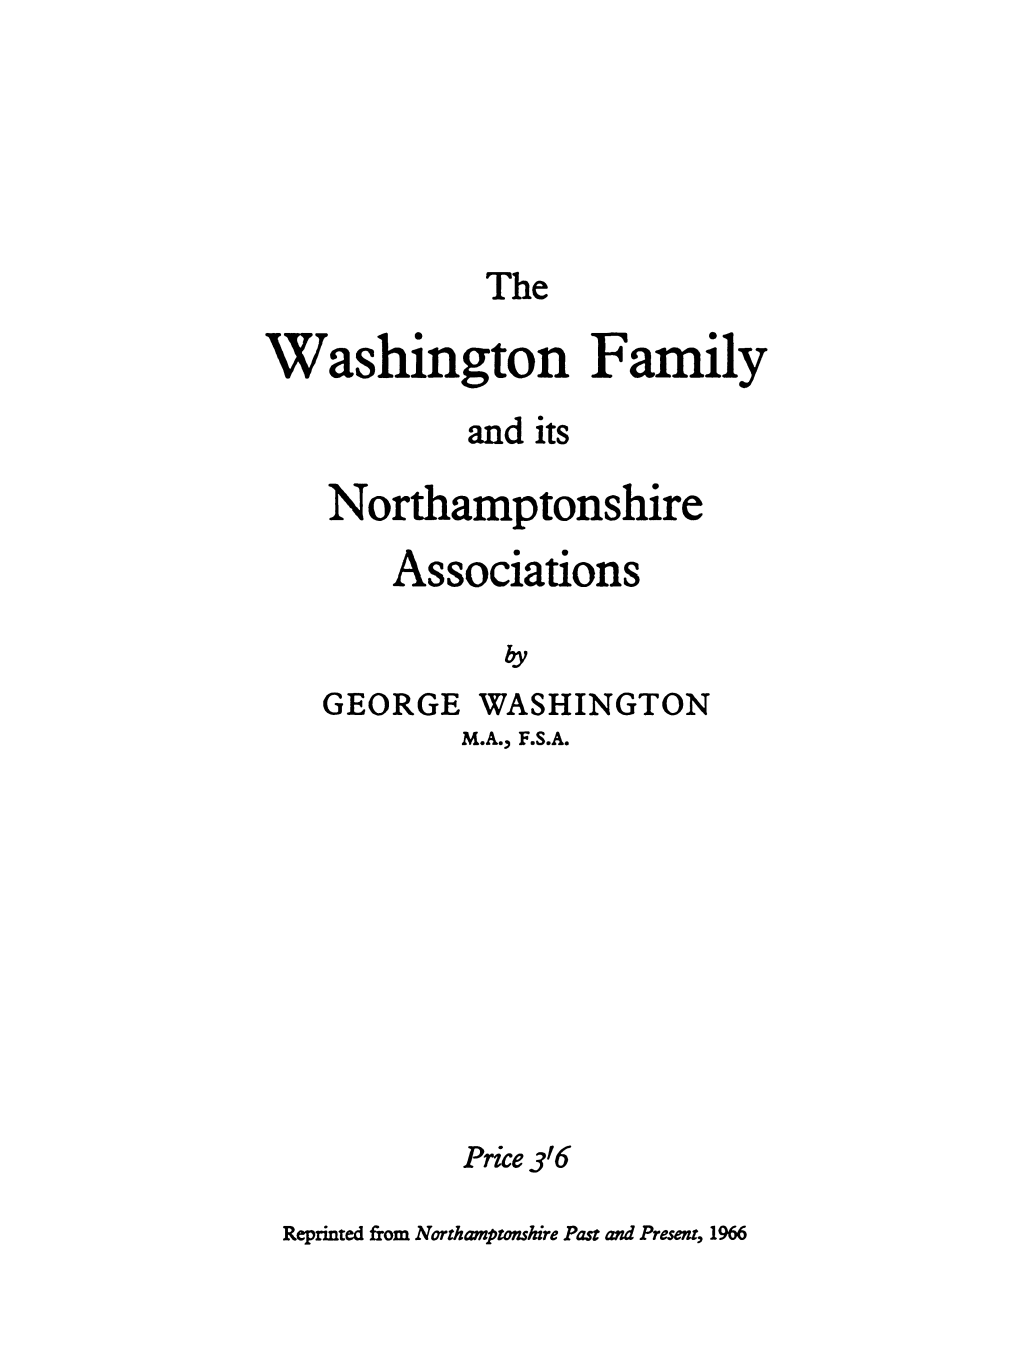 Washington Family and Its Northamptonshire Associations